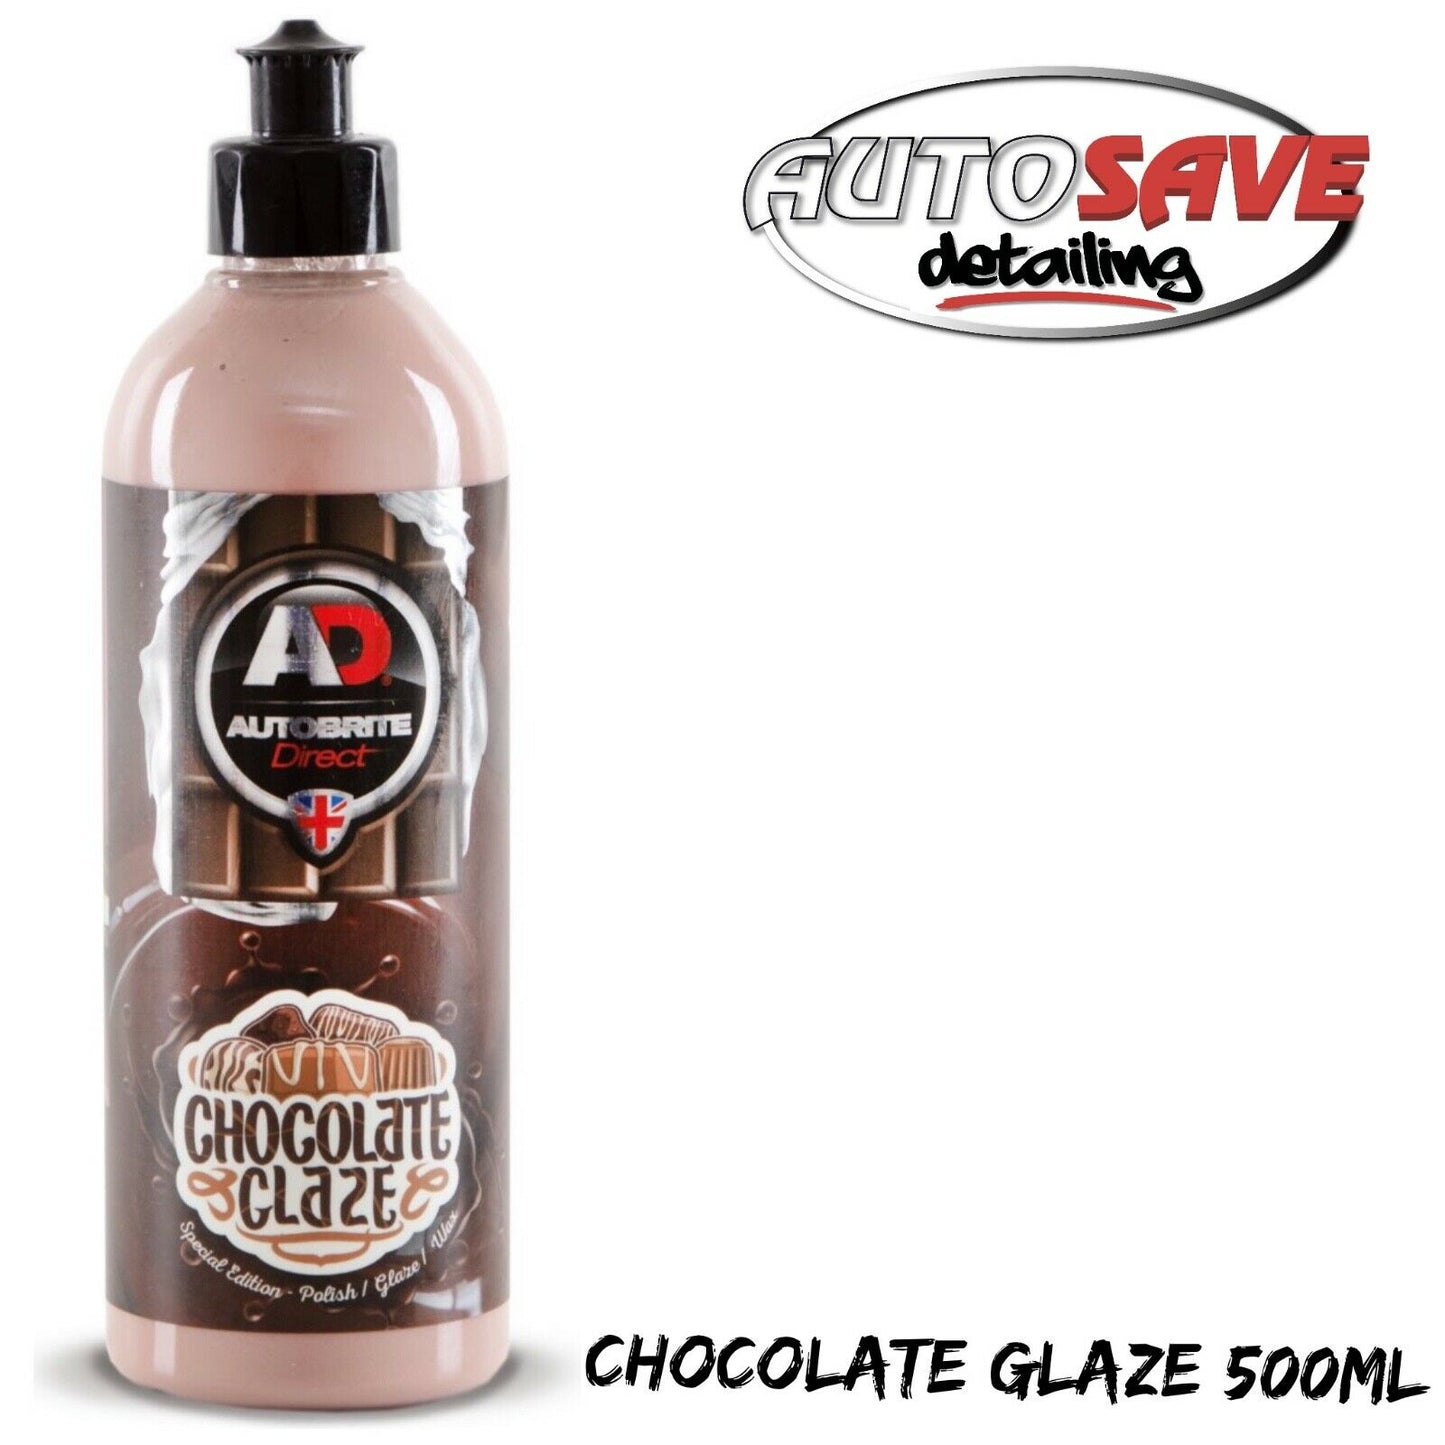 Autobrite Direct - Chocolate Glaze Polish 500ml Special Edition